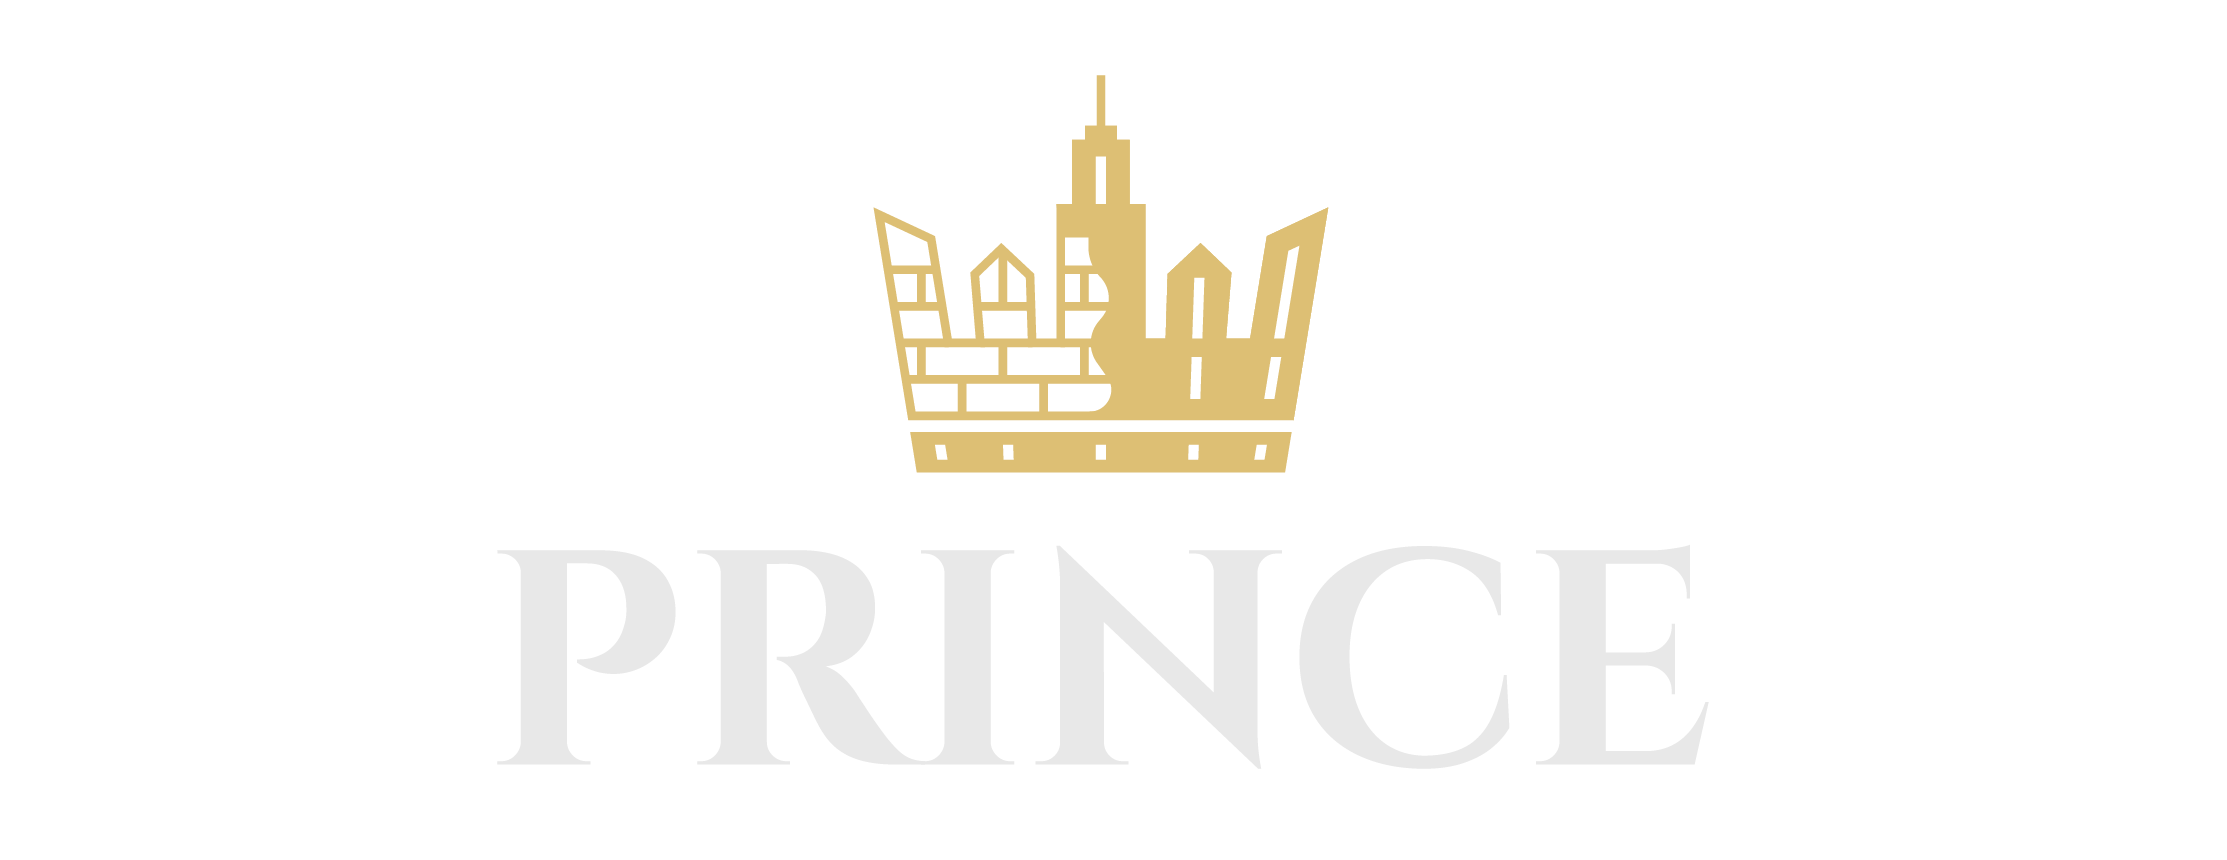 Prince Developers Logo